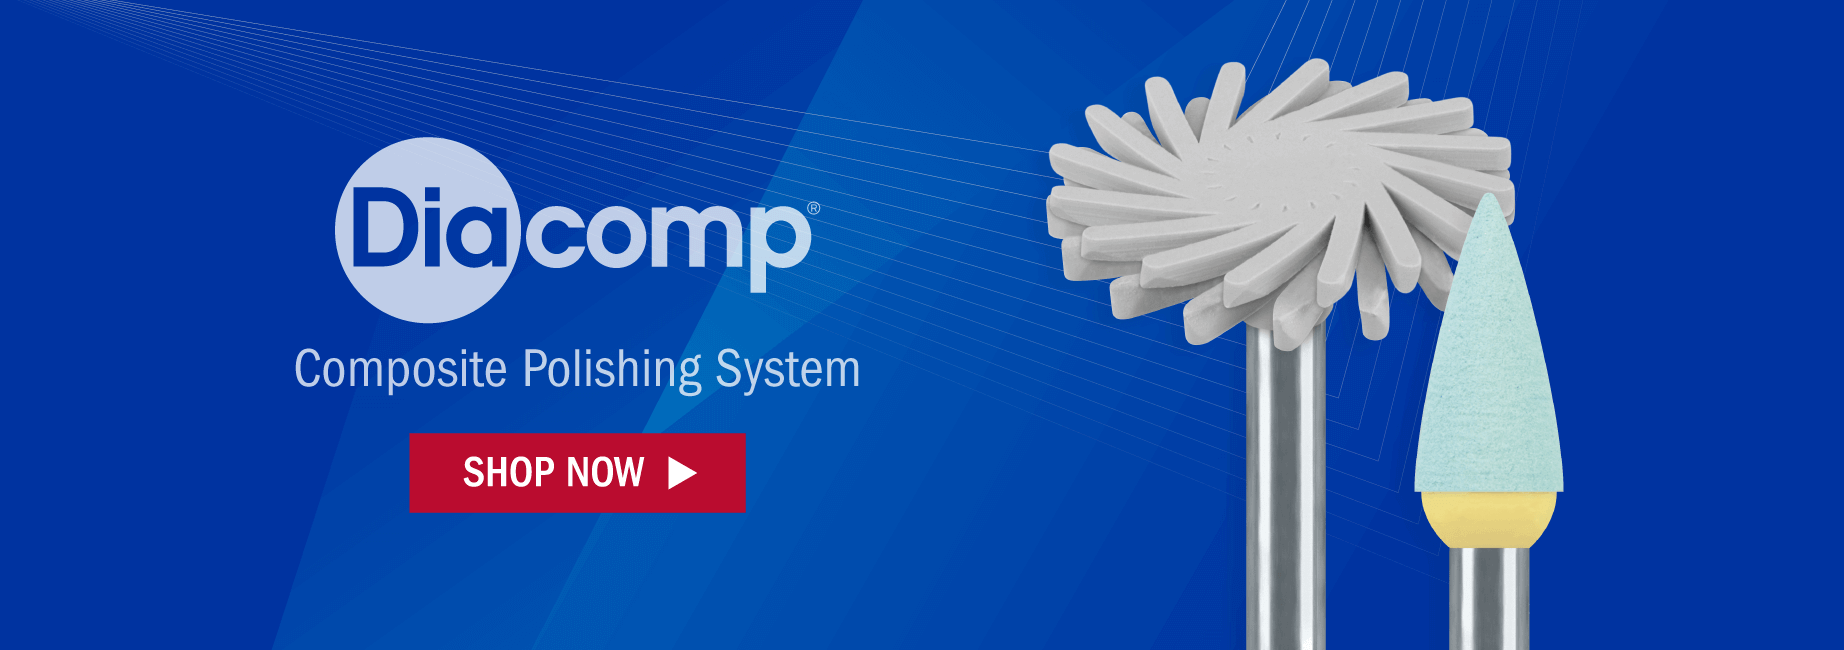 Diacomp Composite Polishing System